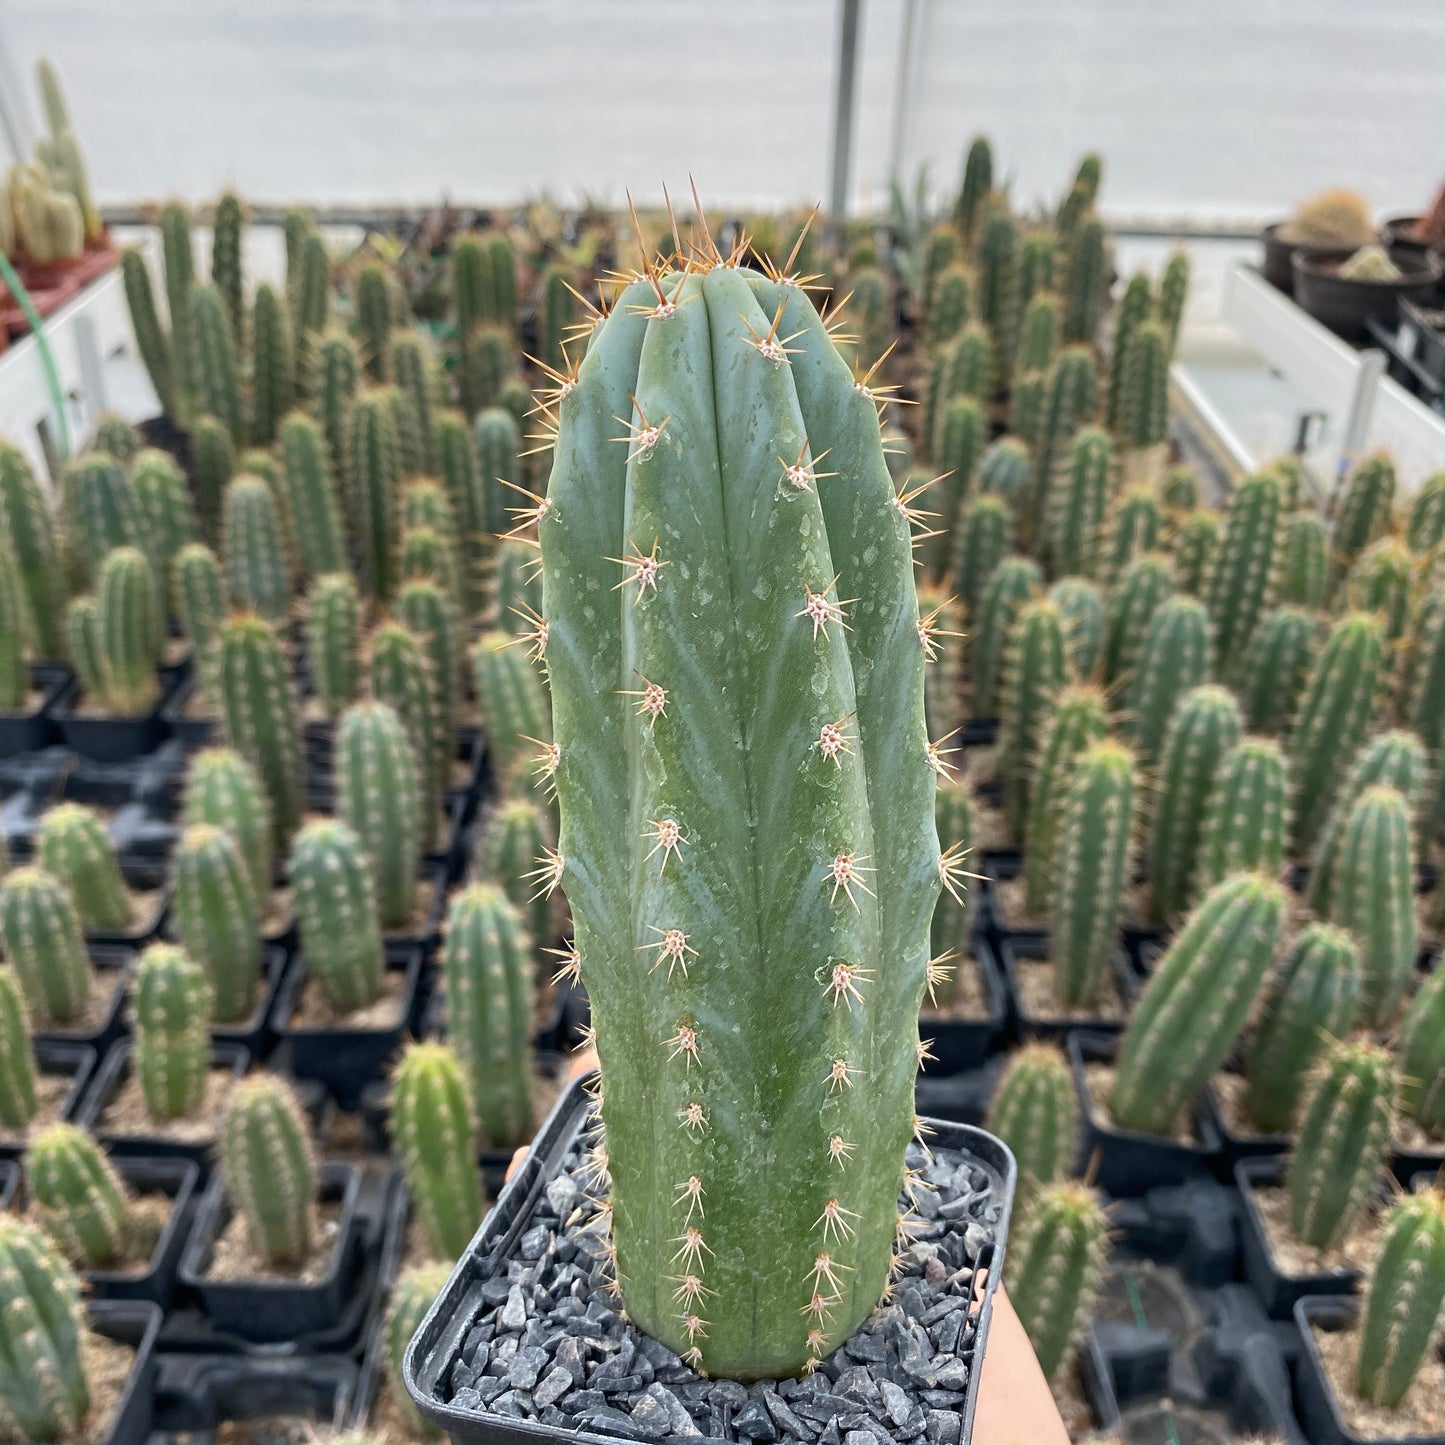 Trichocereus macrogonus subsp. pachanoi (Echinopsis pachanoi) "San Pedro Cactus"